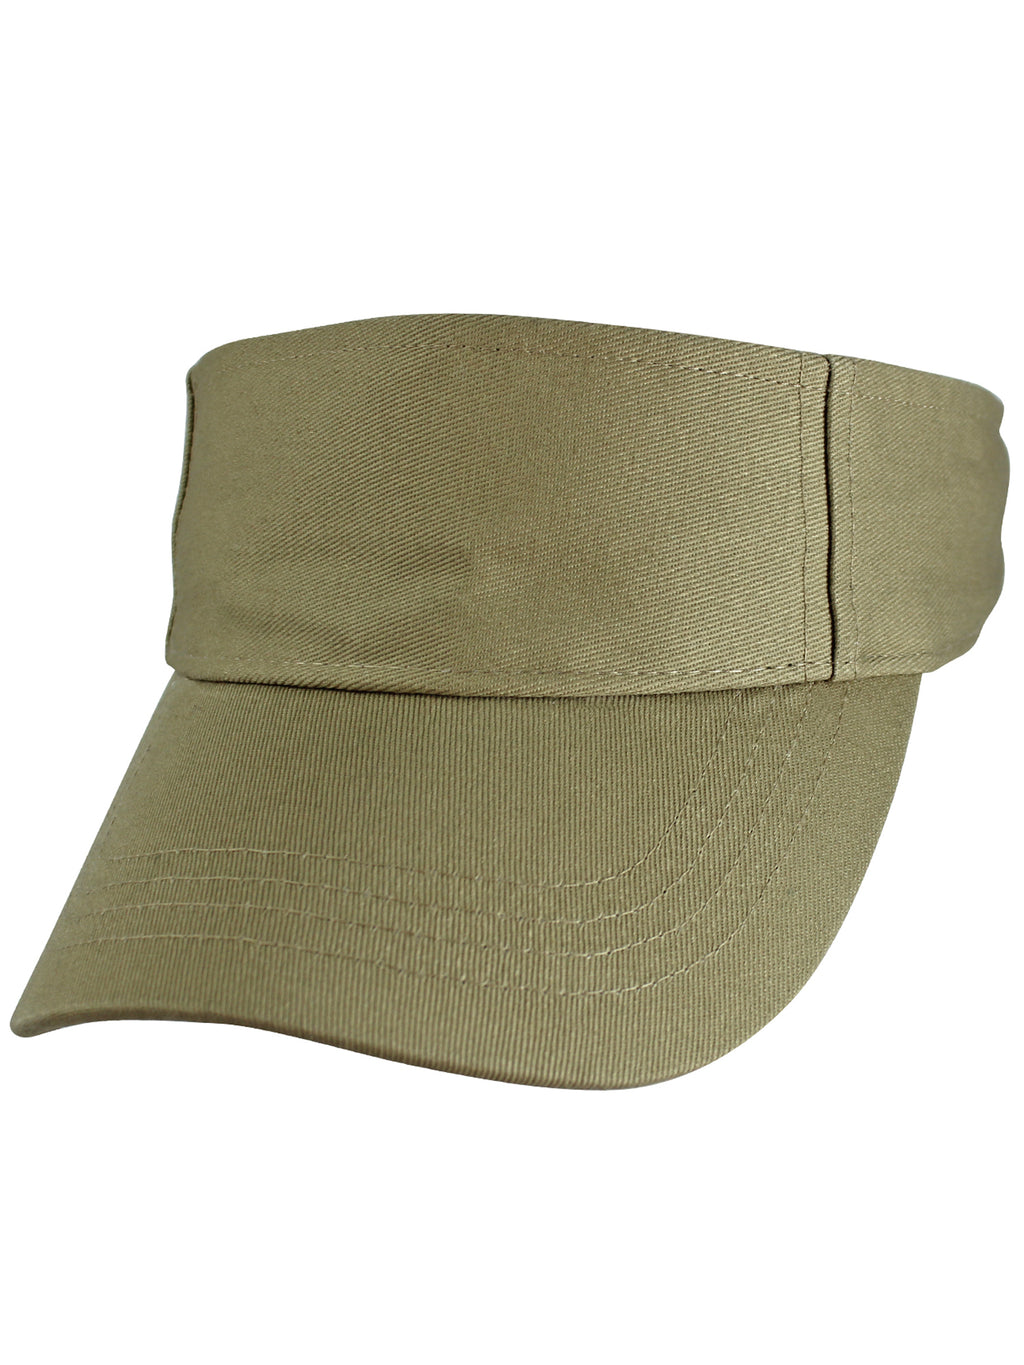 Khaki Beige 100% Cotton Sun Sports Visor Hat